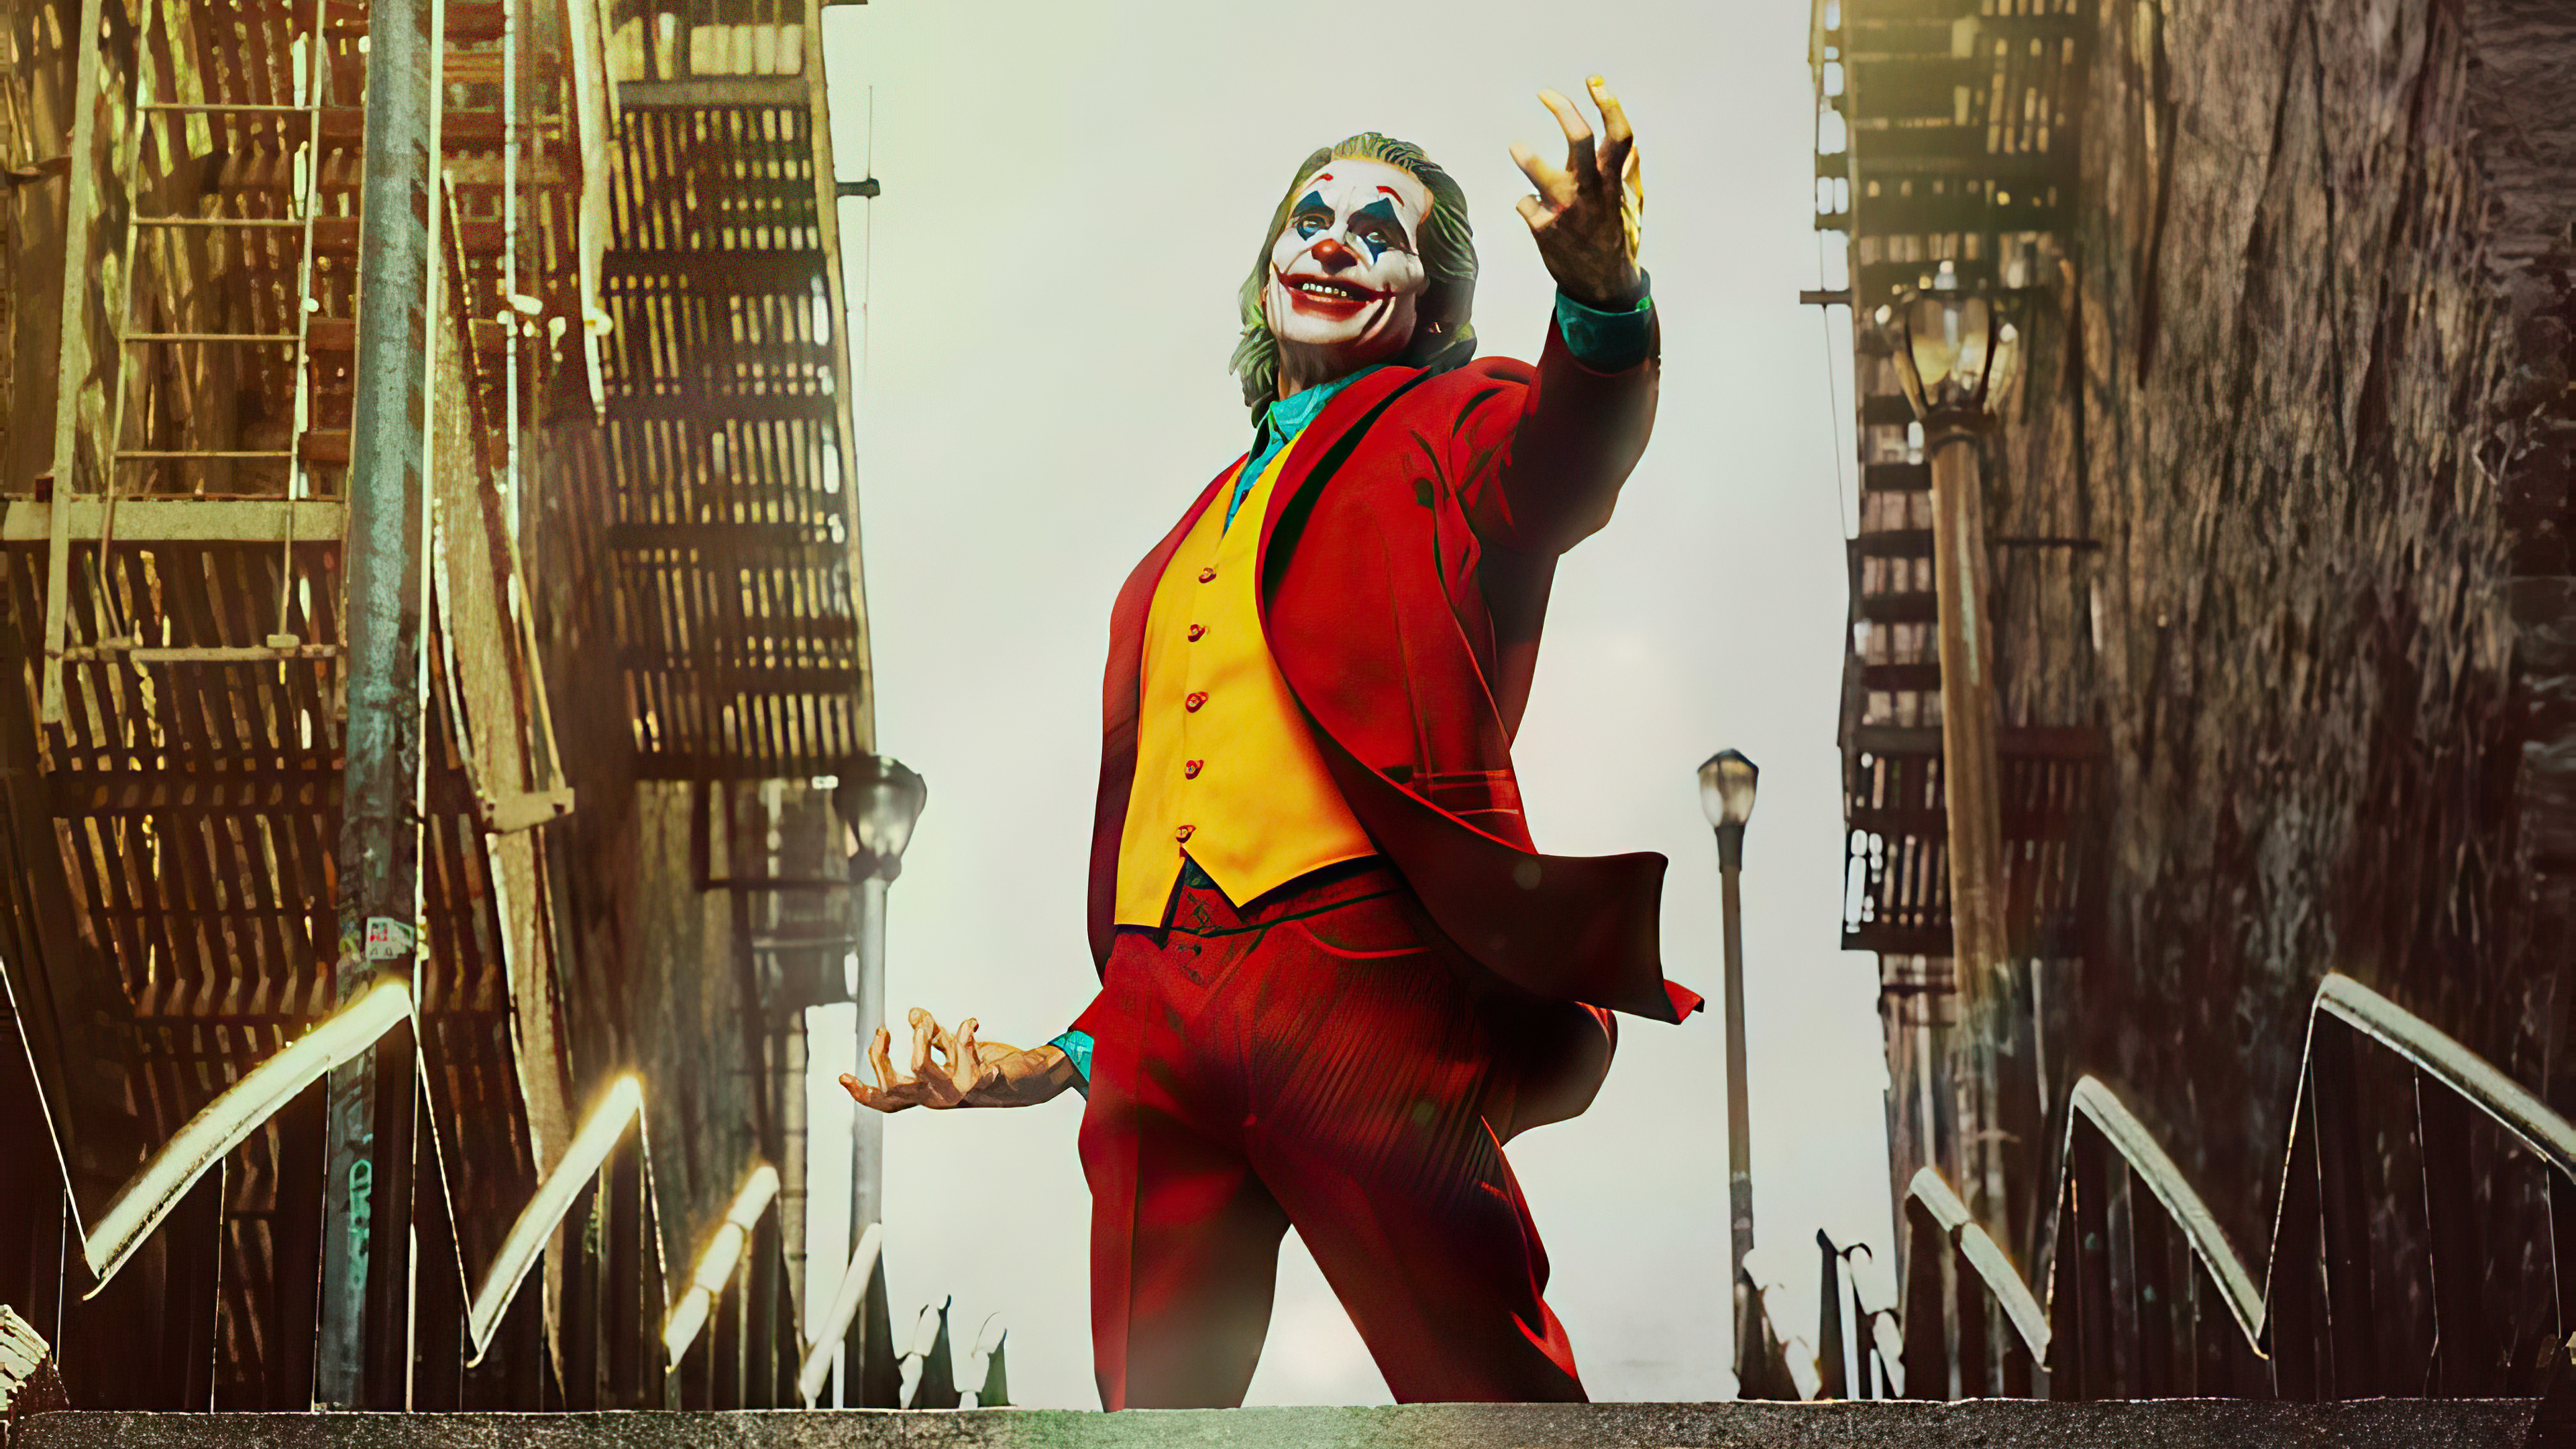 4K Joker 2020 Wallpapers